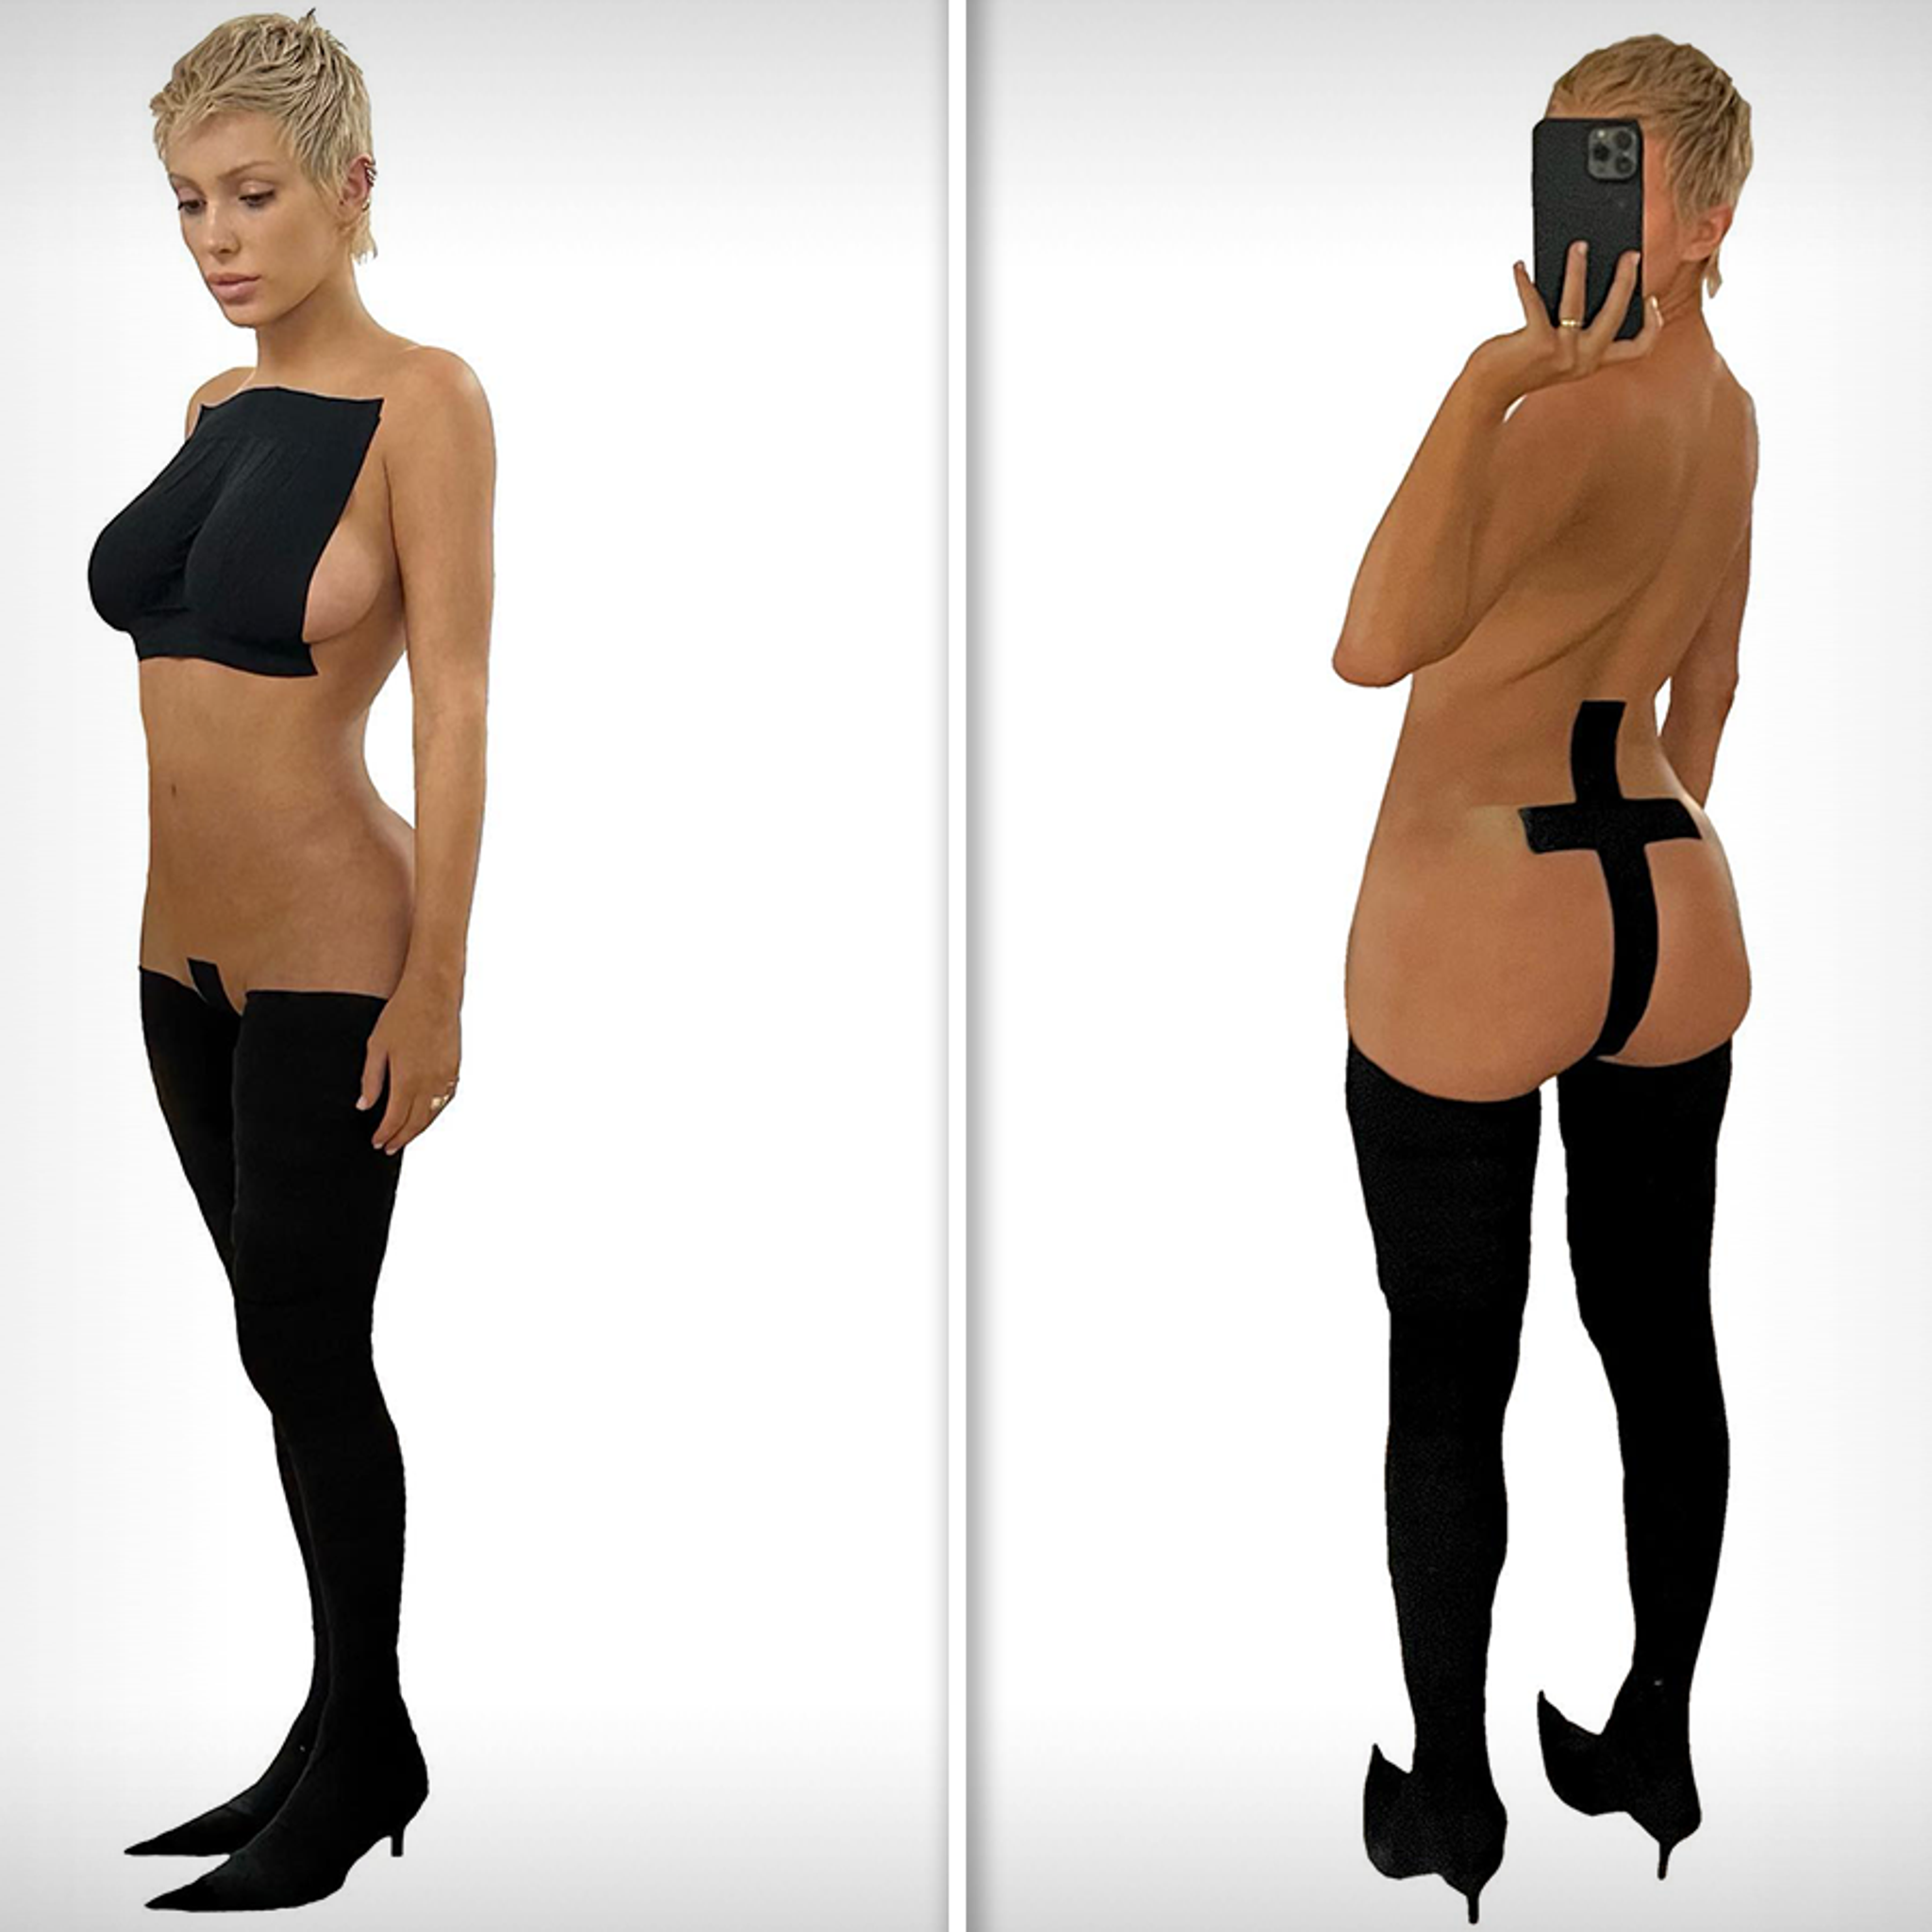 Kanye Wests Wife Bianca Censori Nearly Nude, Models New Fashion Line image